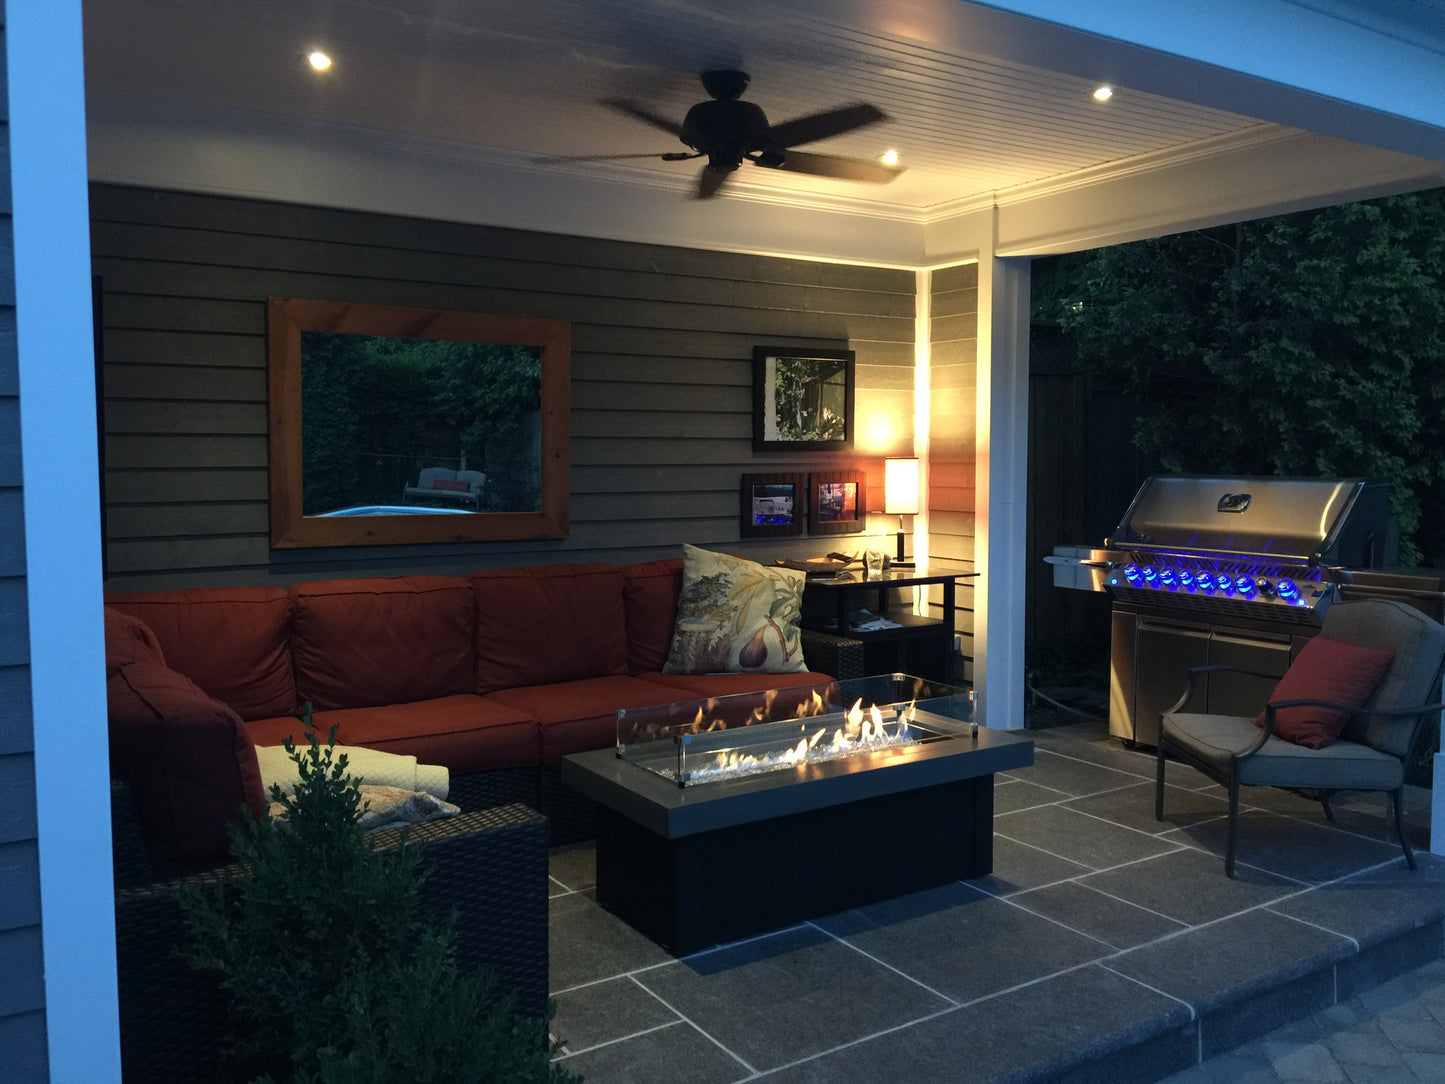 Outdoor GreatRoom Key Largo Fire Table - Midnight Mist